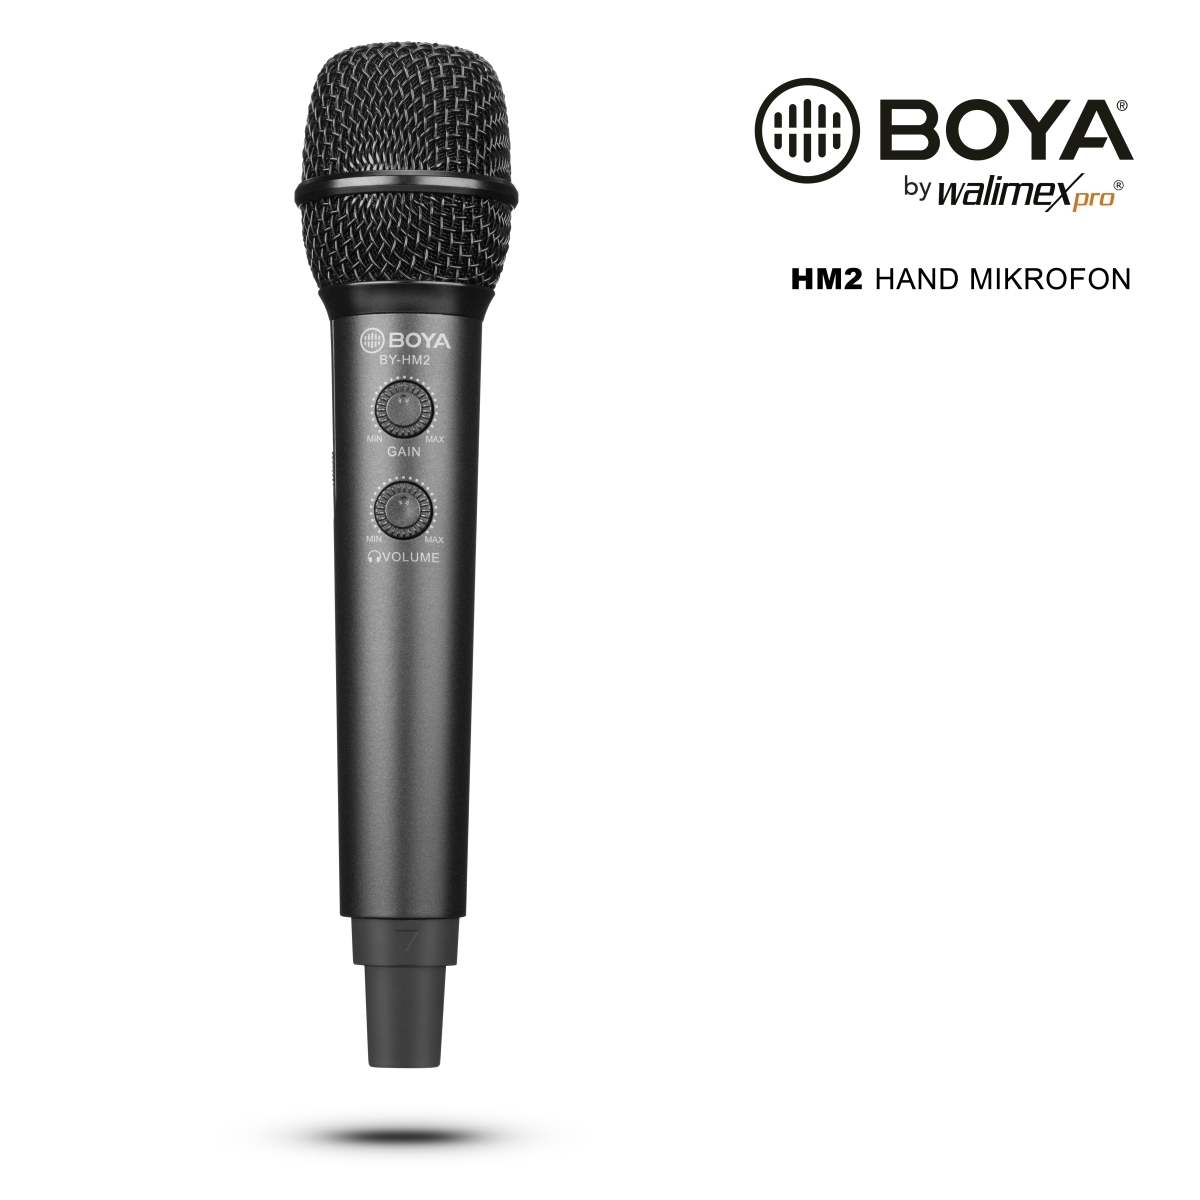 Walimex pro Boya HM2 Handheld Microphone - walimex & walimex pro